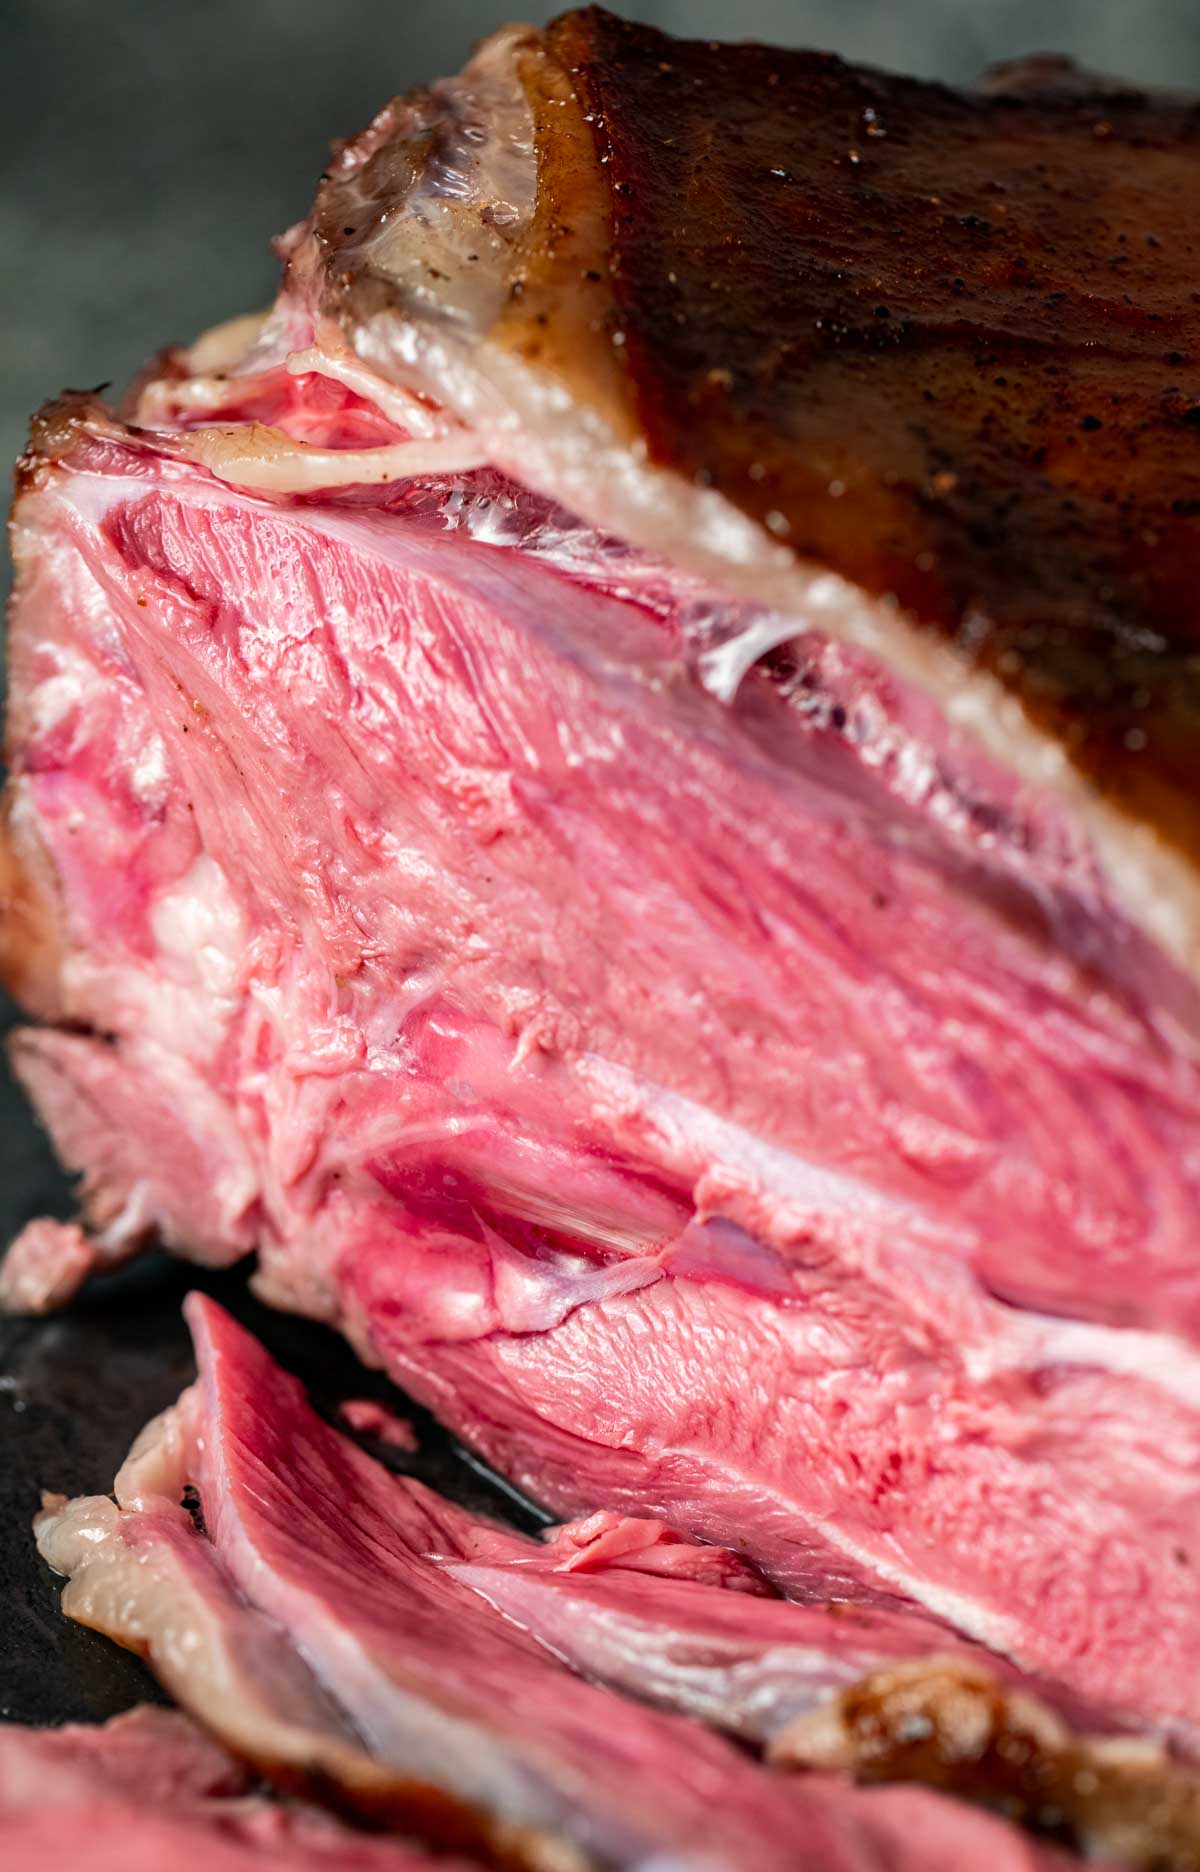 Close up view of the medium rare leg of lamb meat.